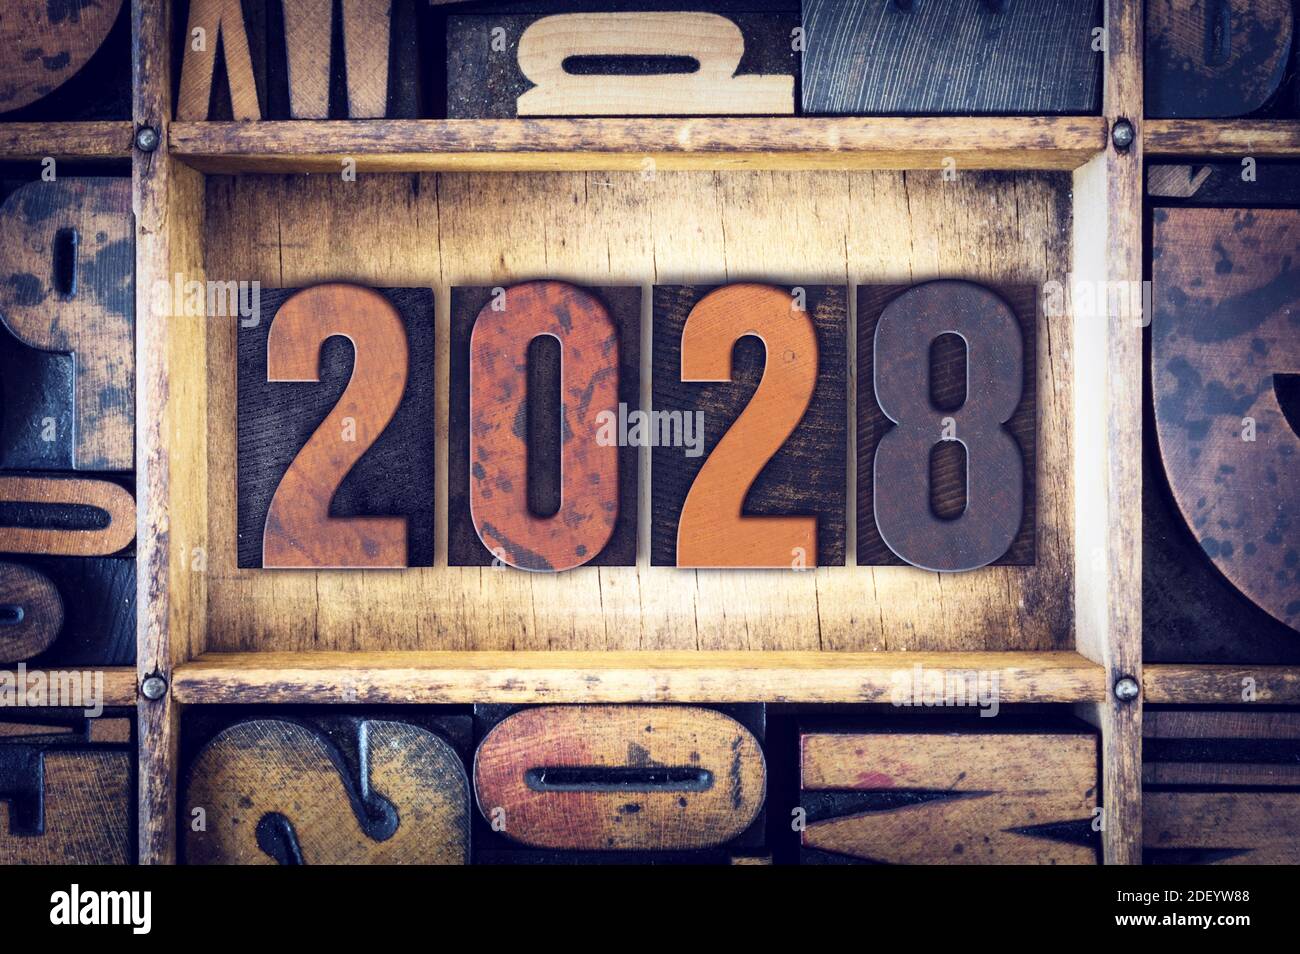 2028 calendar Banque d'images vectorielles - Alamy